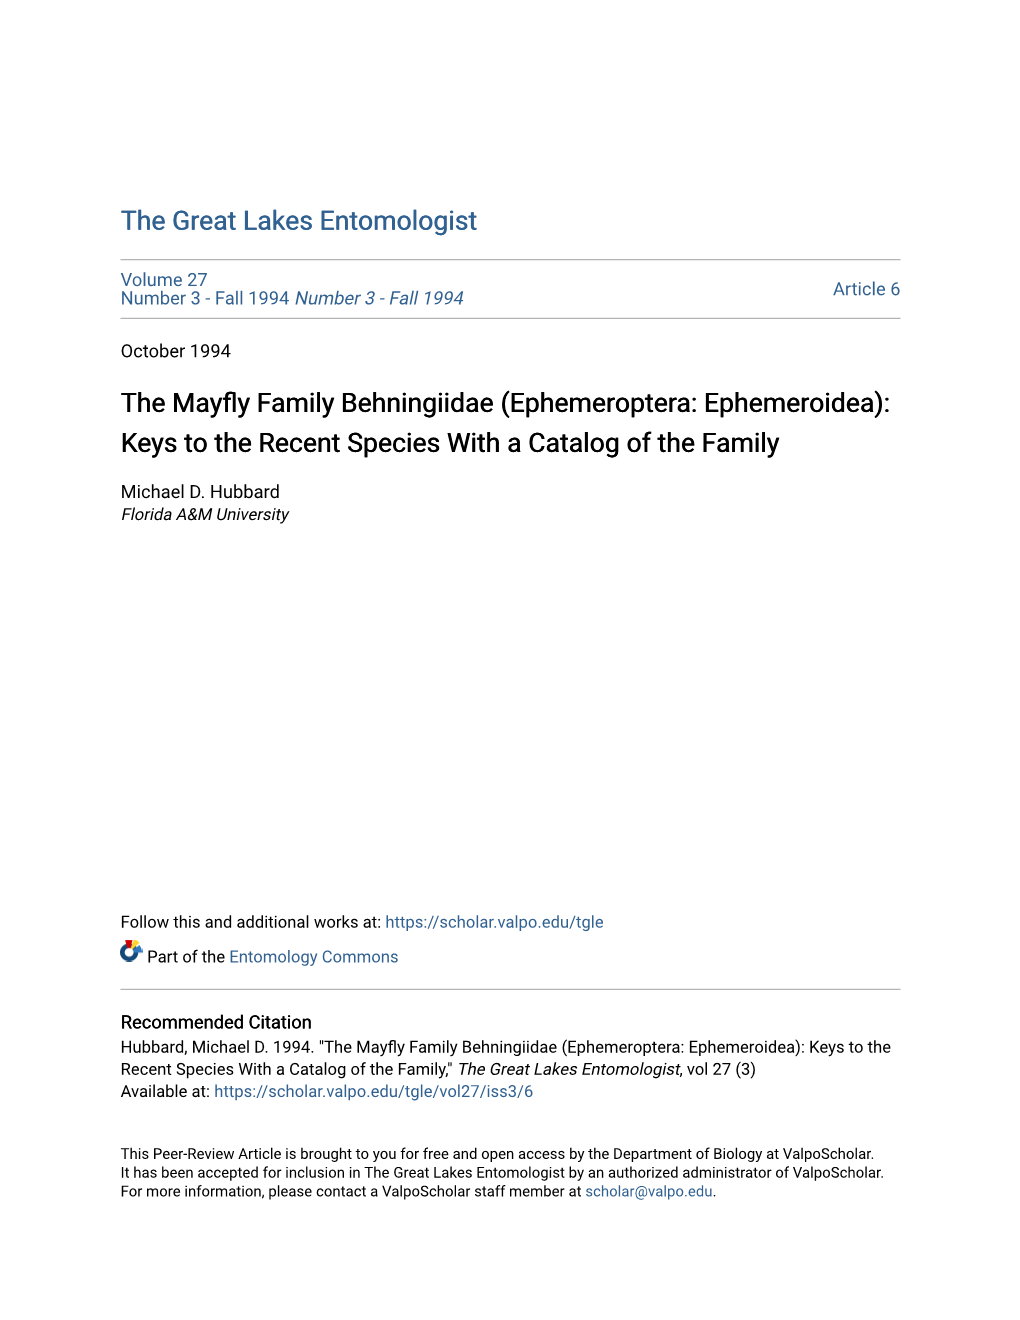 Ephemeroptera: Ephemeroidea): Keys to the Recent Species with a Catalog of the Family